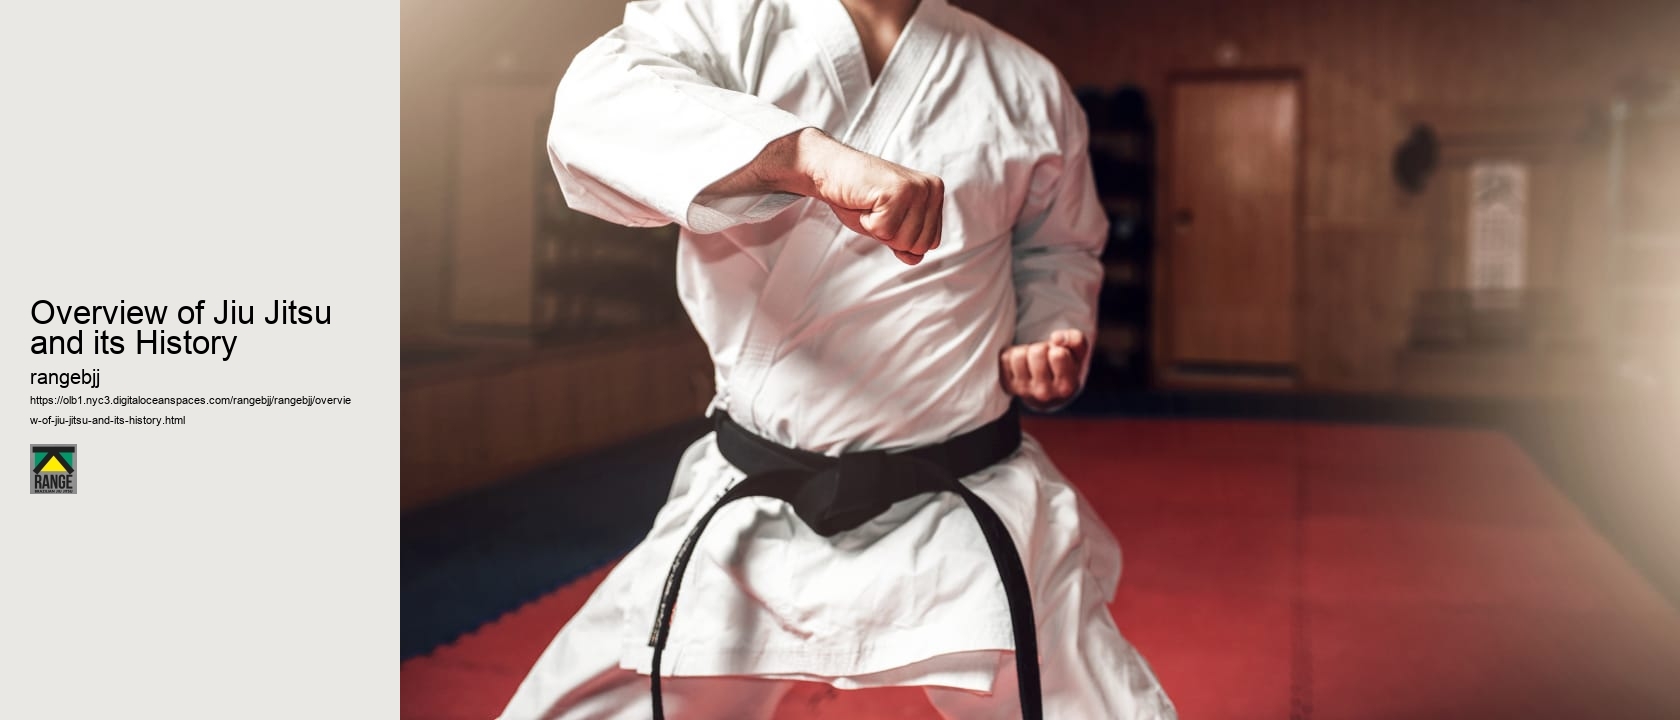 Overview of Jiu Jitsu and its History 